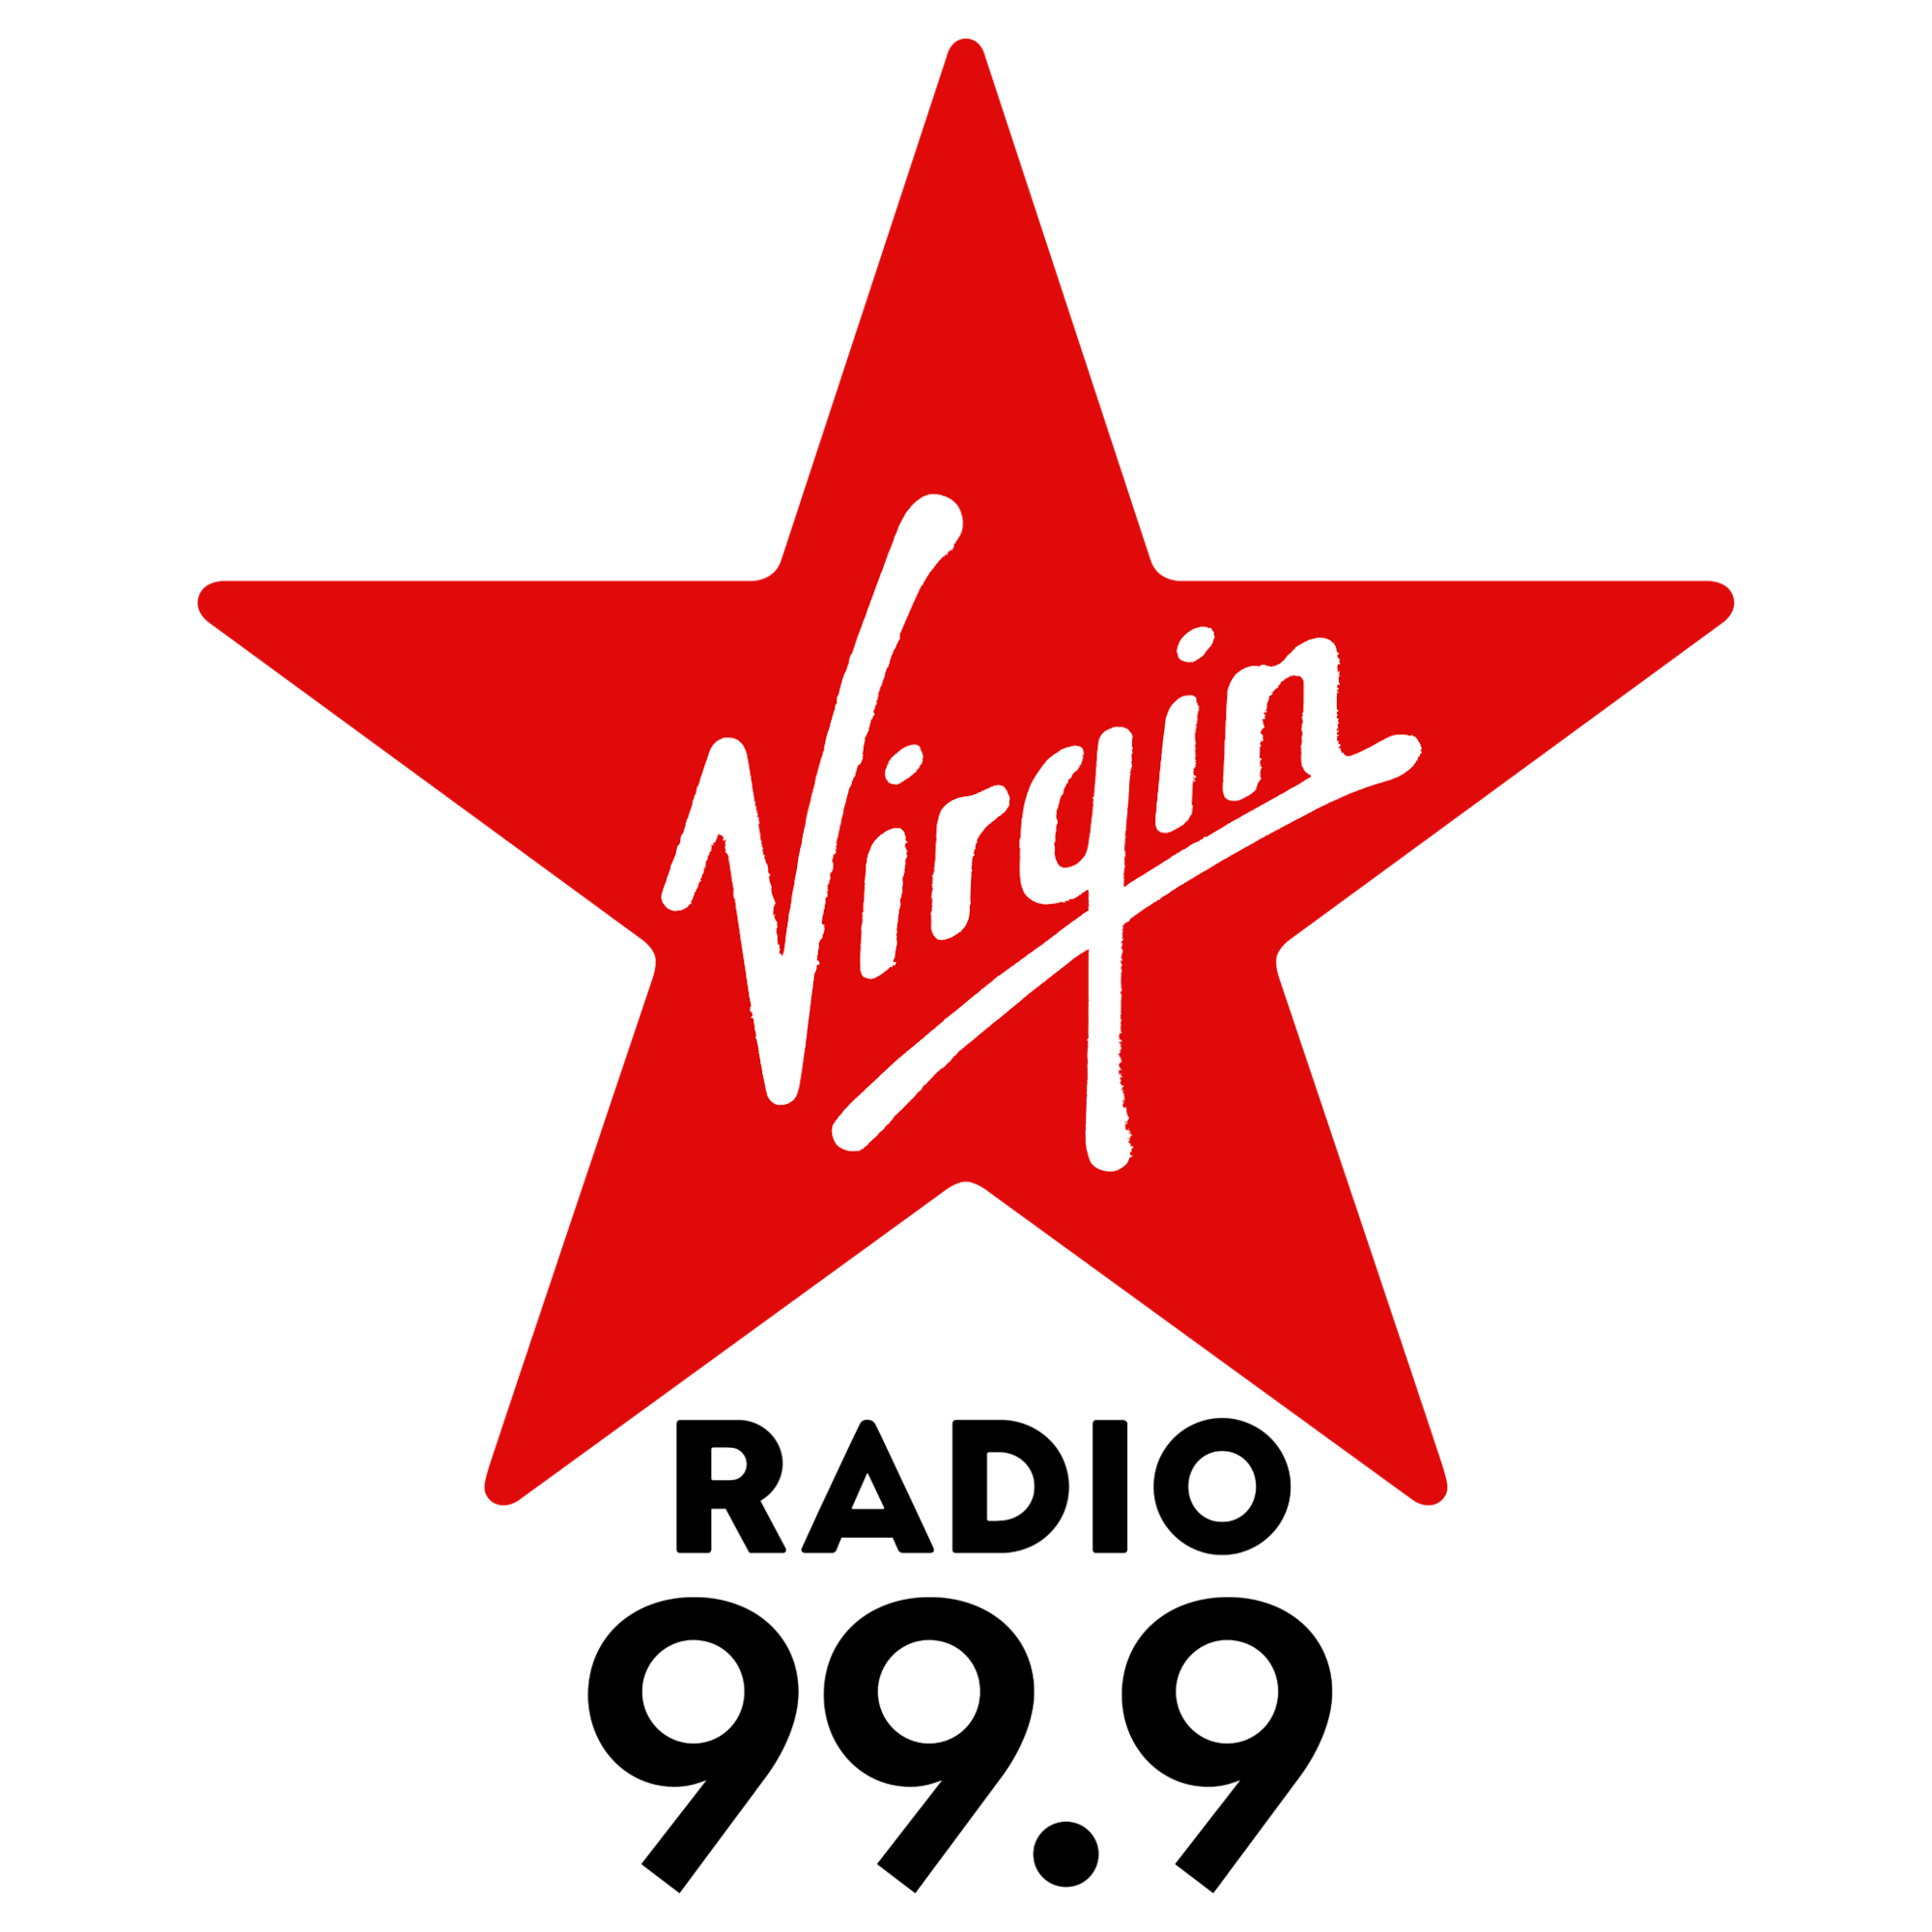 99.9 Virgin Radio Kelowna J logo